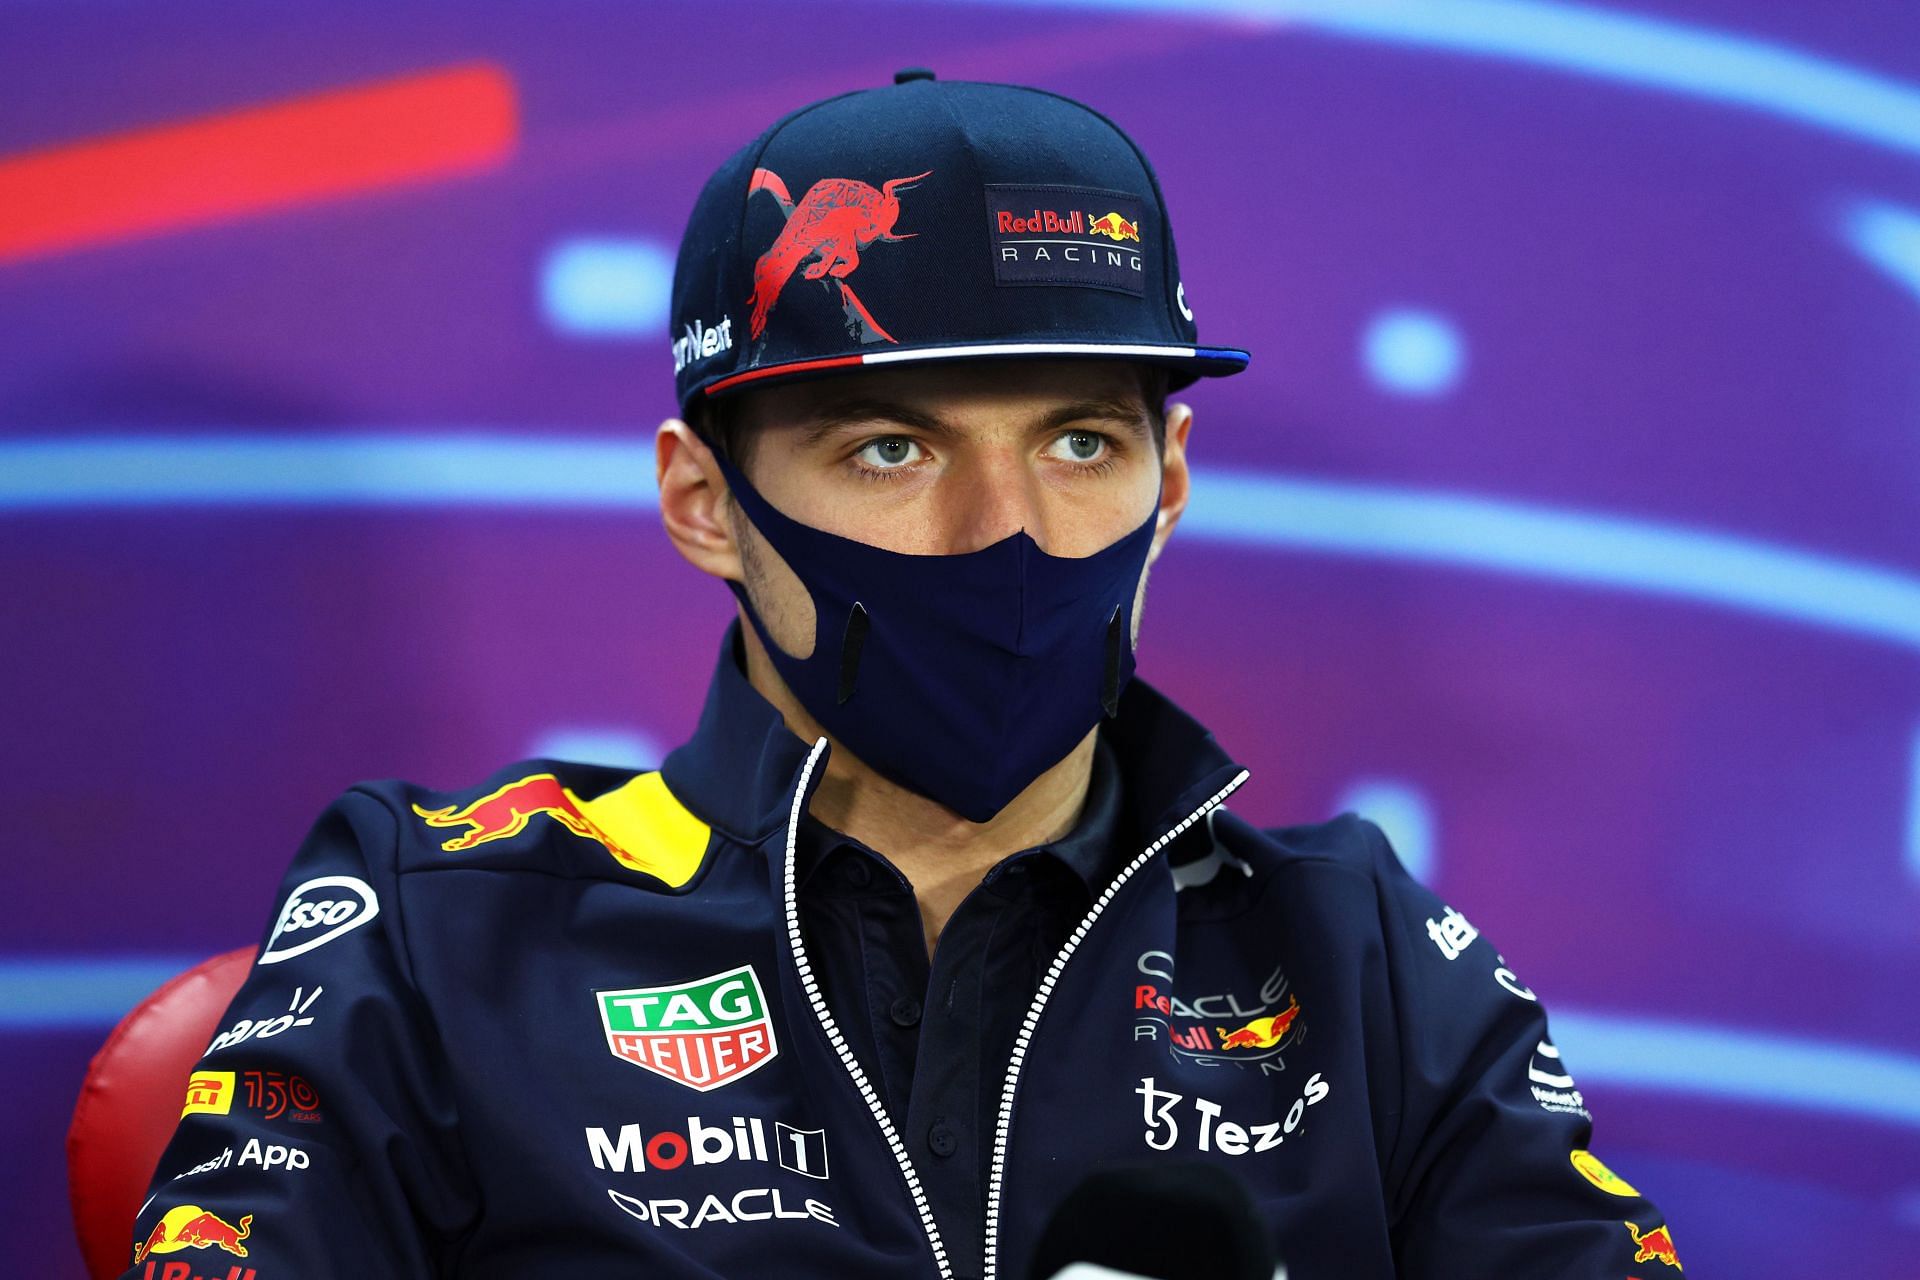 F1 Grand Prix of Bahrain - Practice - Max Verstappen prepares for the 2022 season